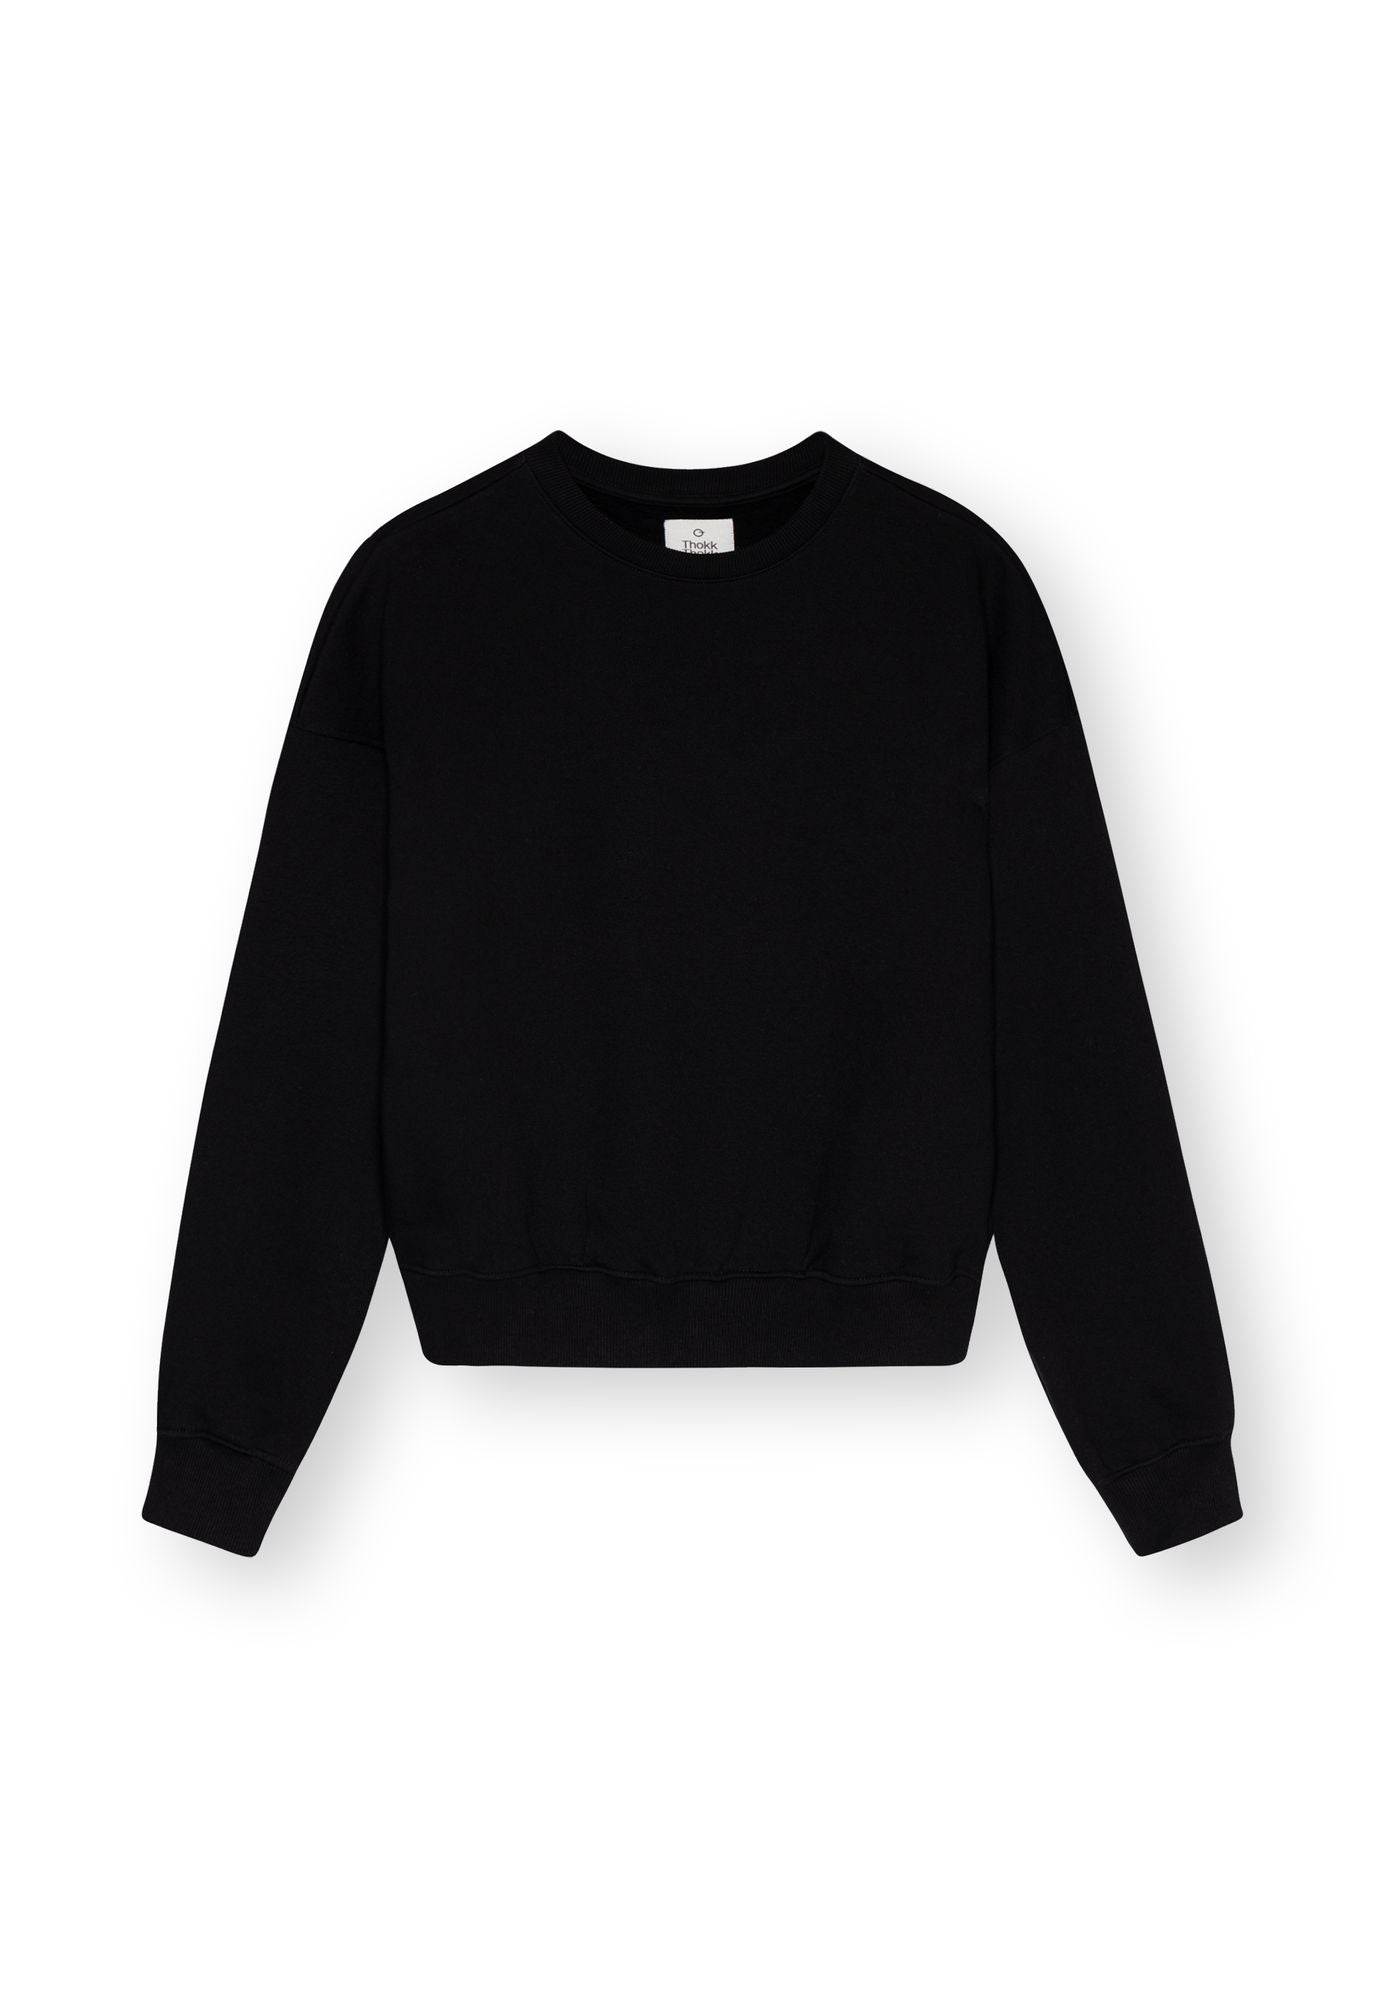 Black sweater TT1022 made of organic cotton from Thokkthokk